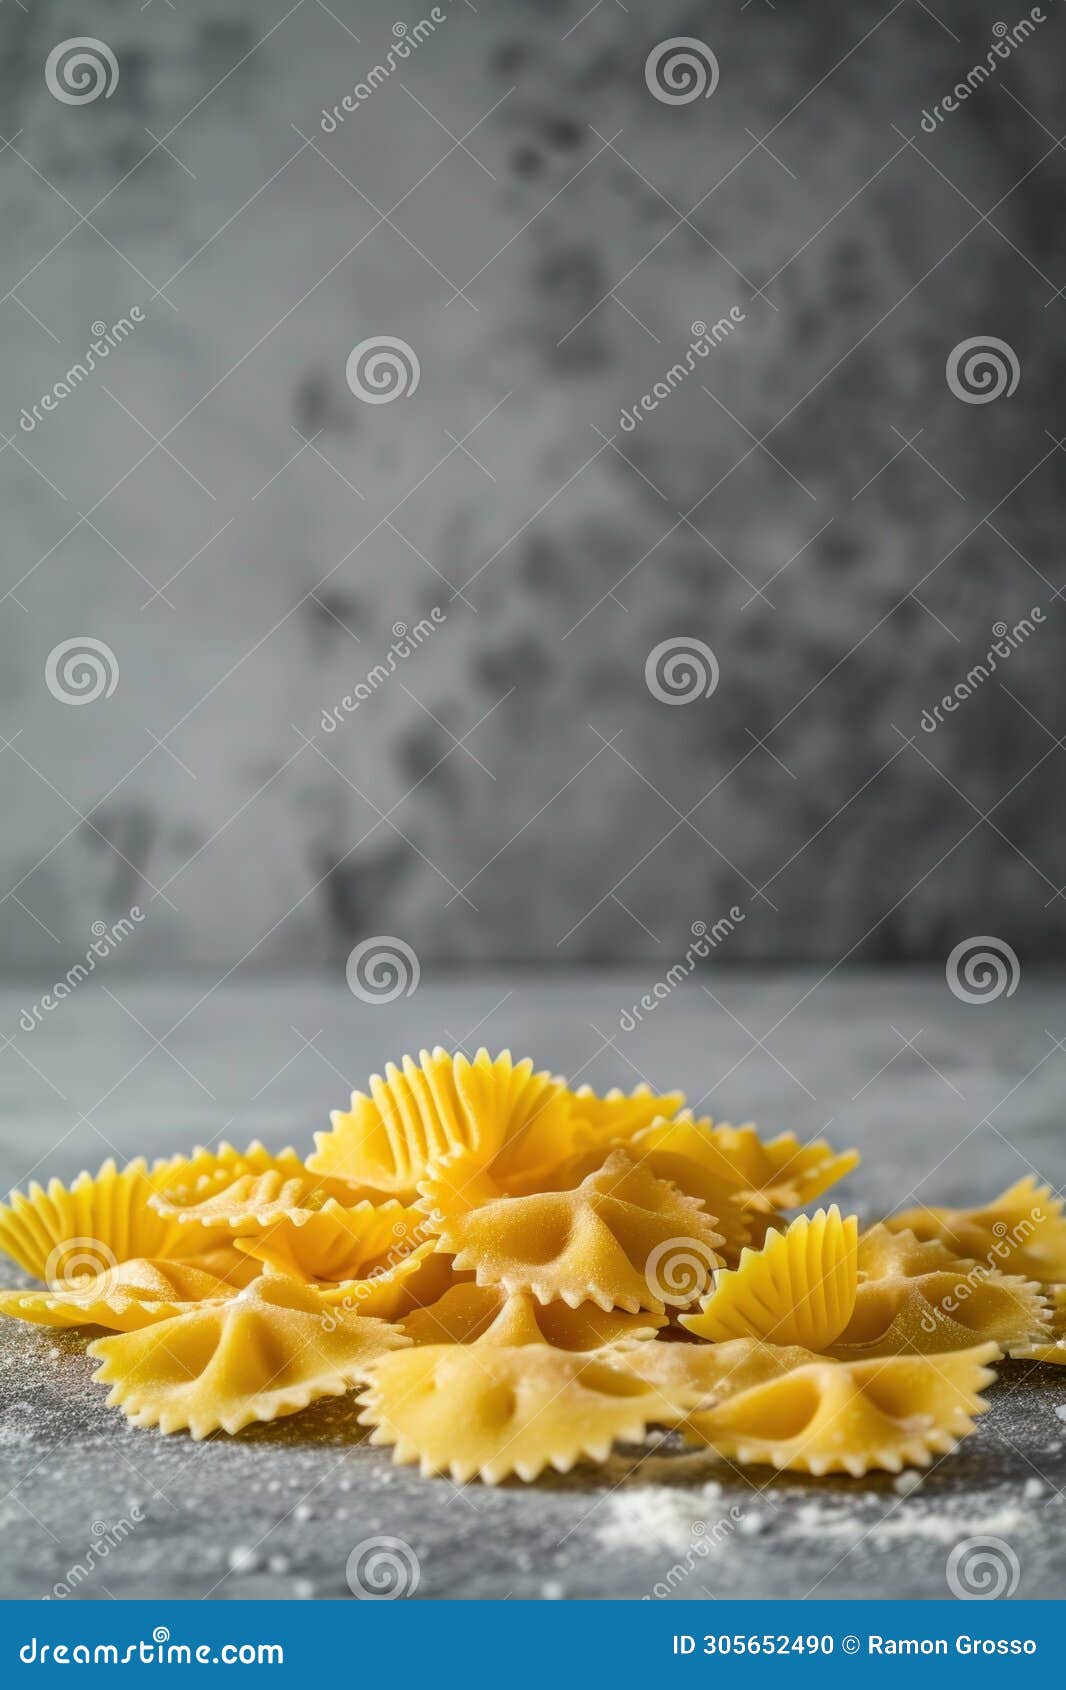 assorted italian fresh pasta